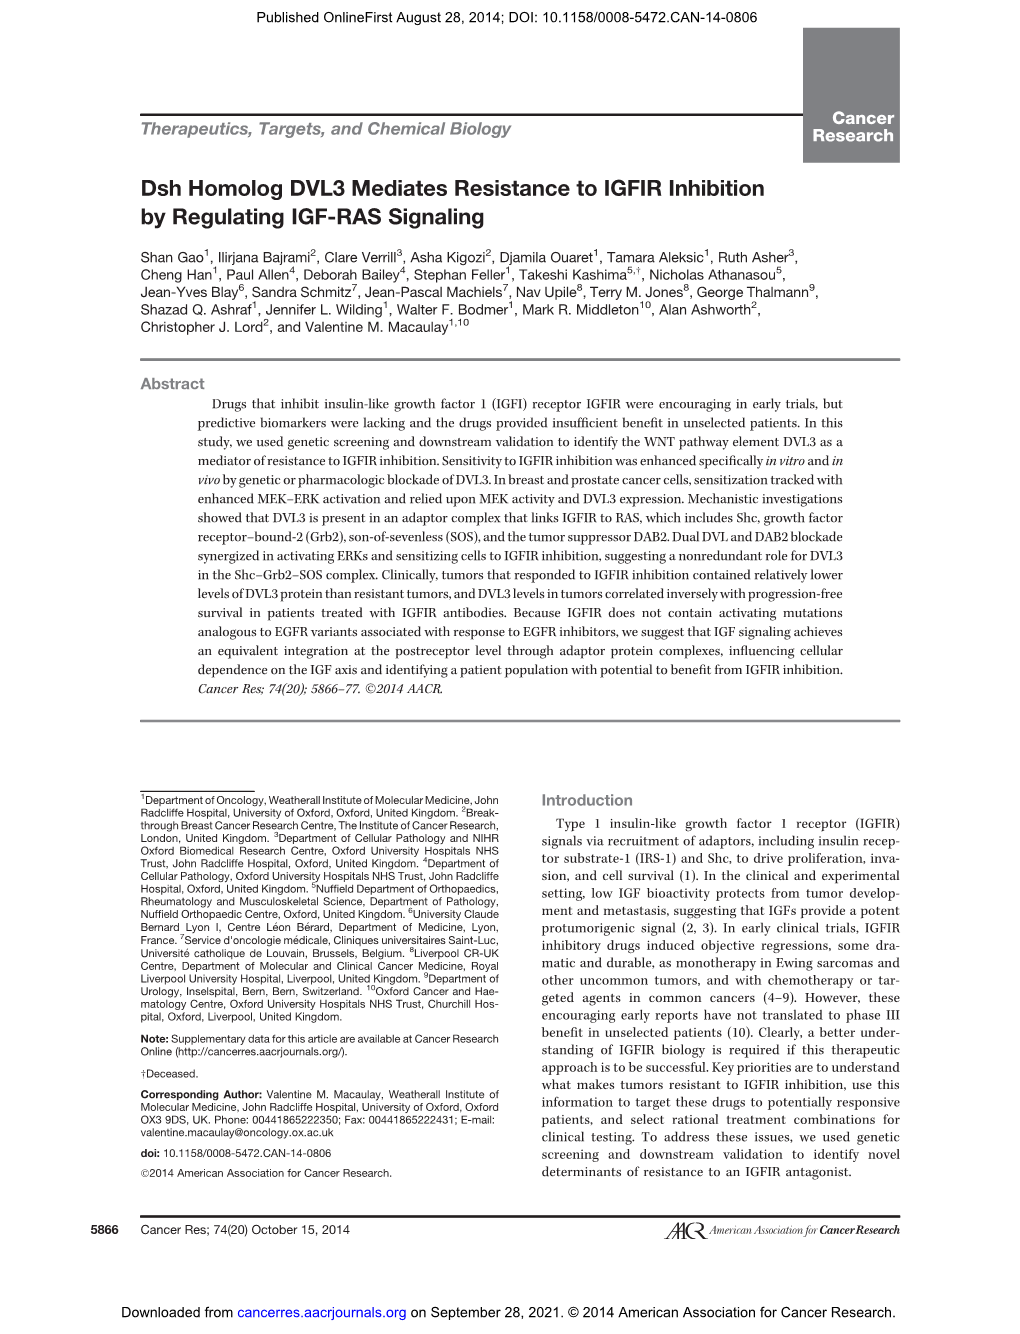 Dsh Homolog DVL3 Mediates Resistance to IGFIR Inhibition by Regulating IGF-RAS Signaling